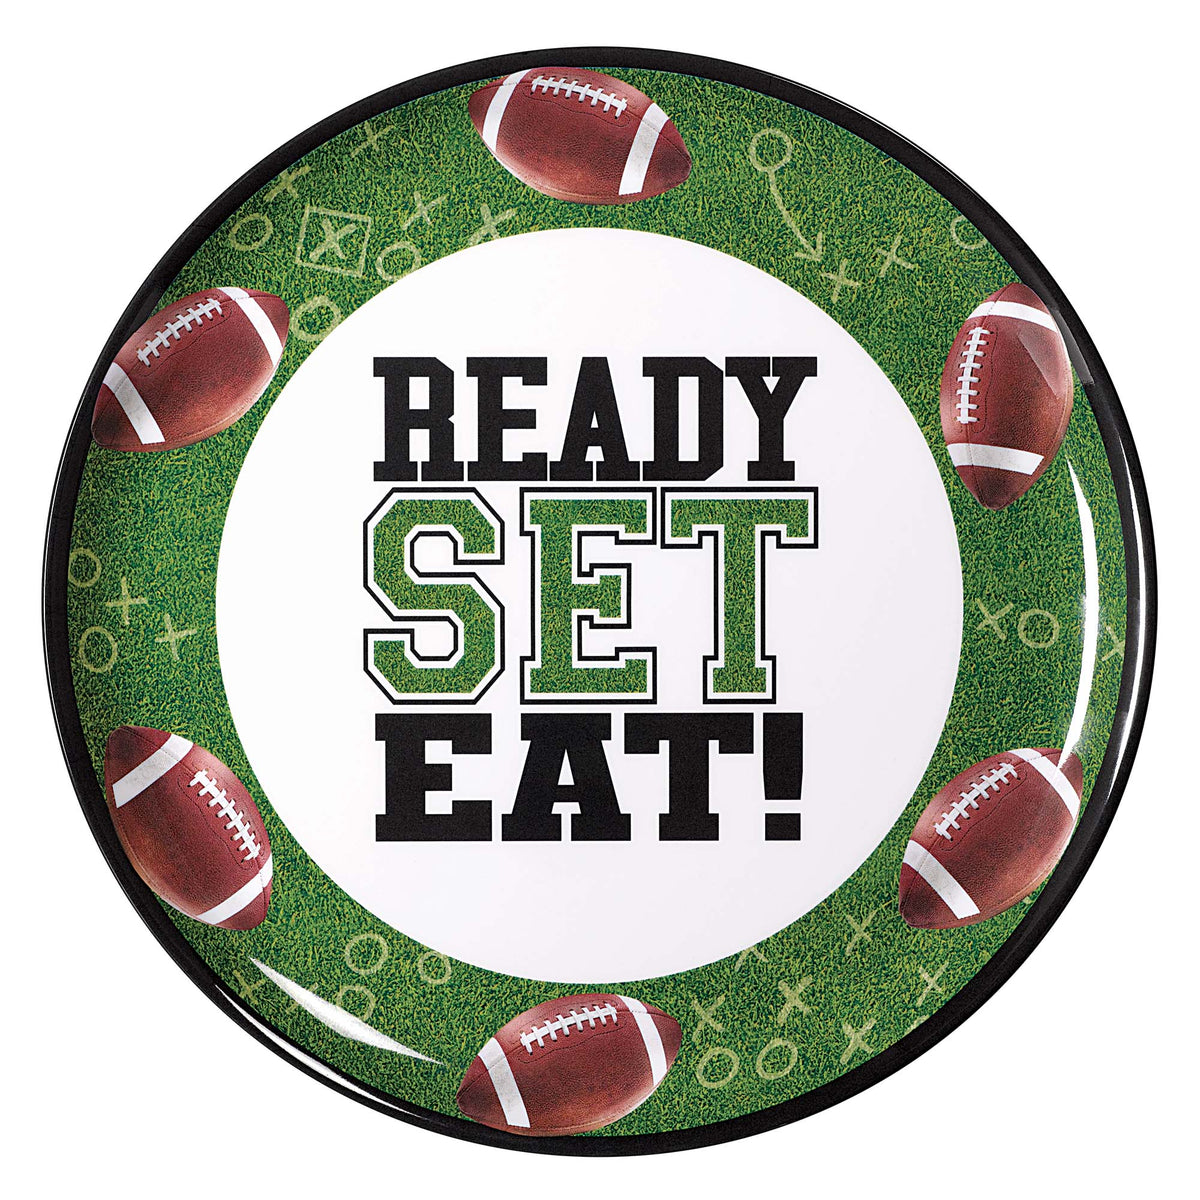 Football "Ready to eat?" Melamine 13" Round Platter